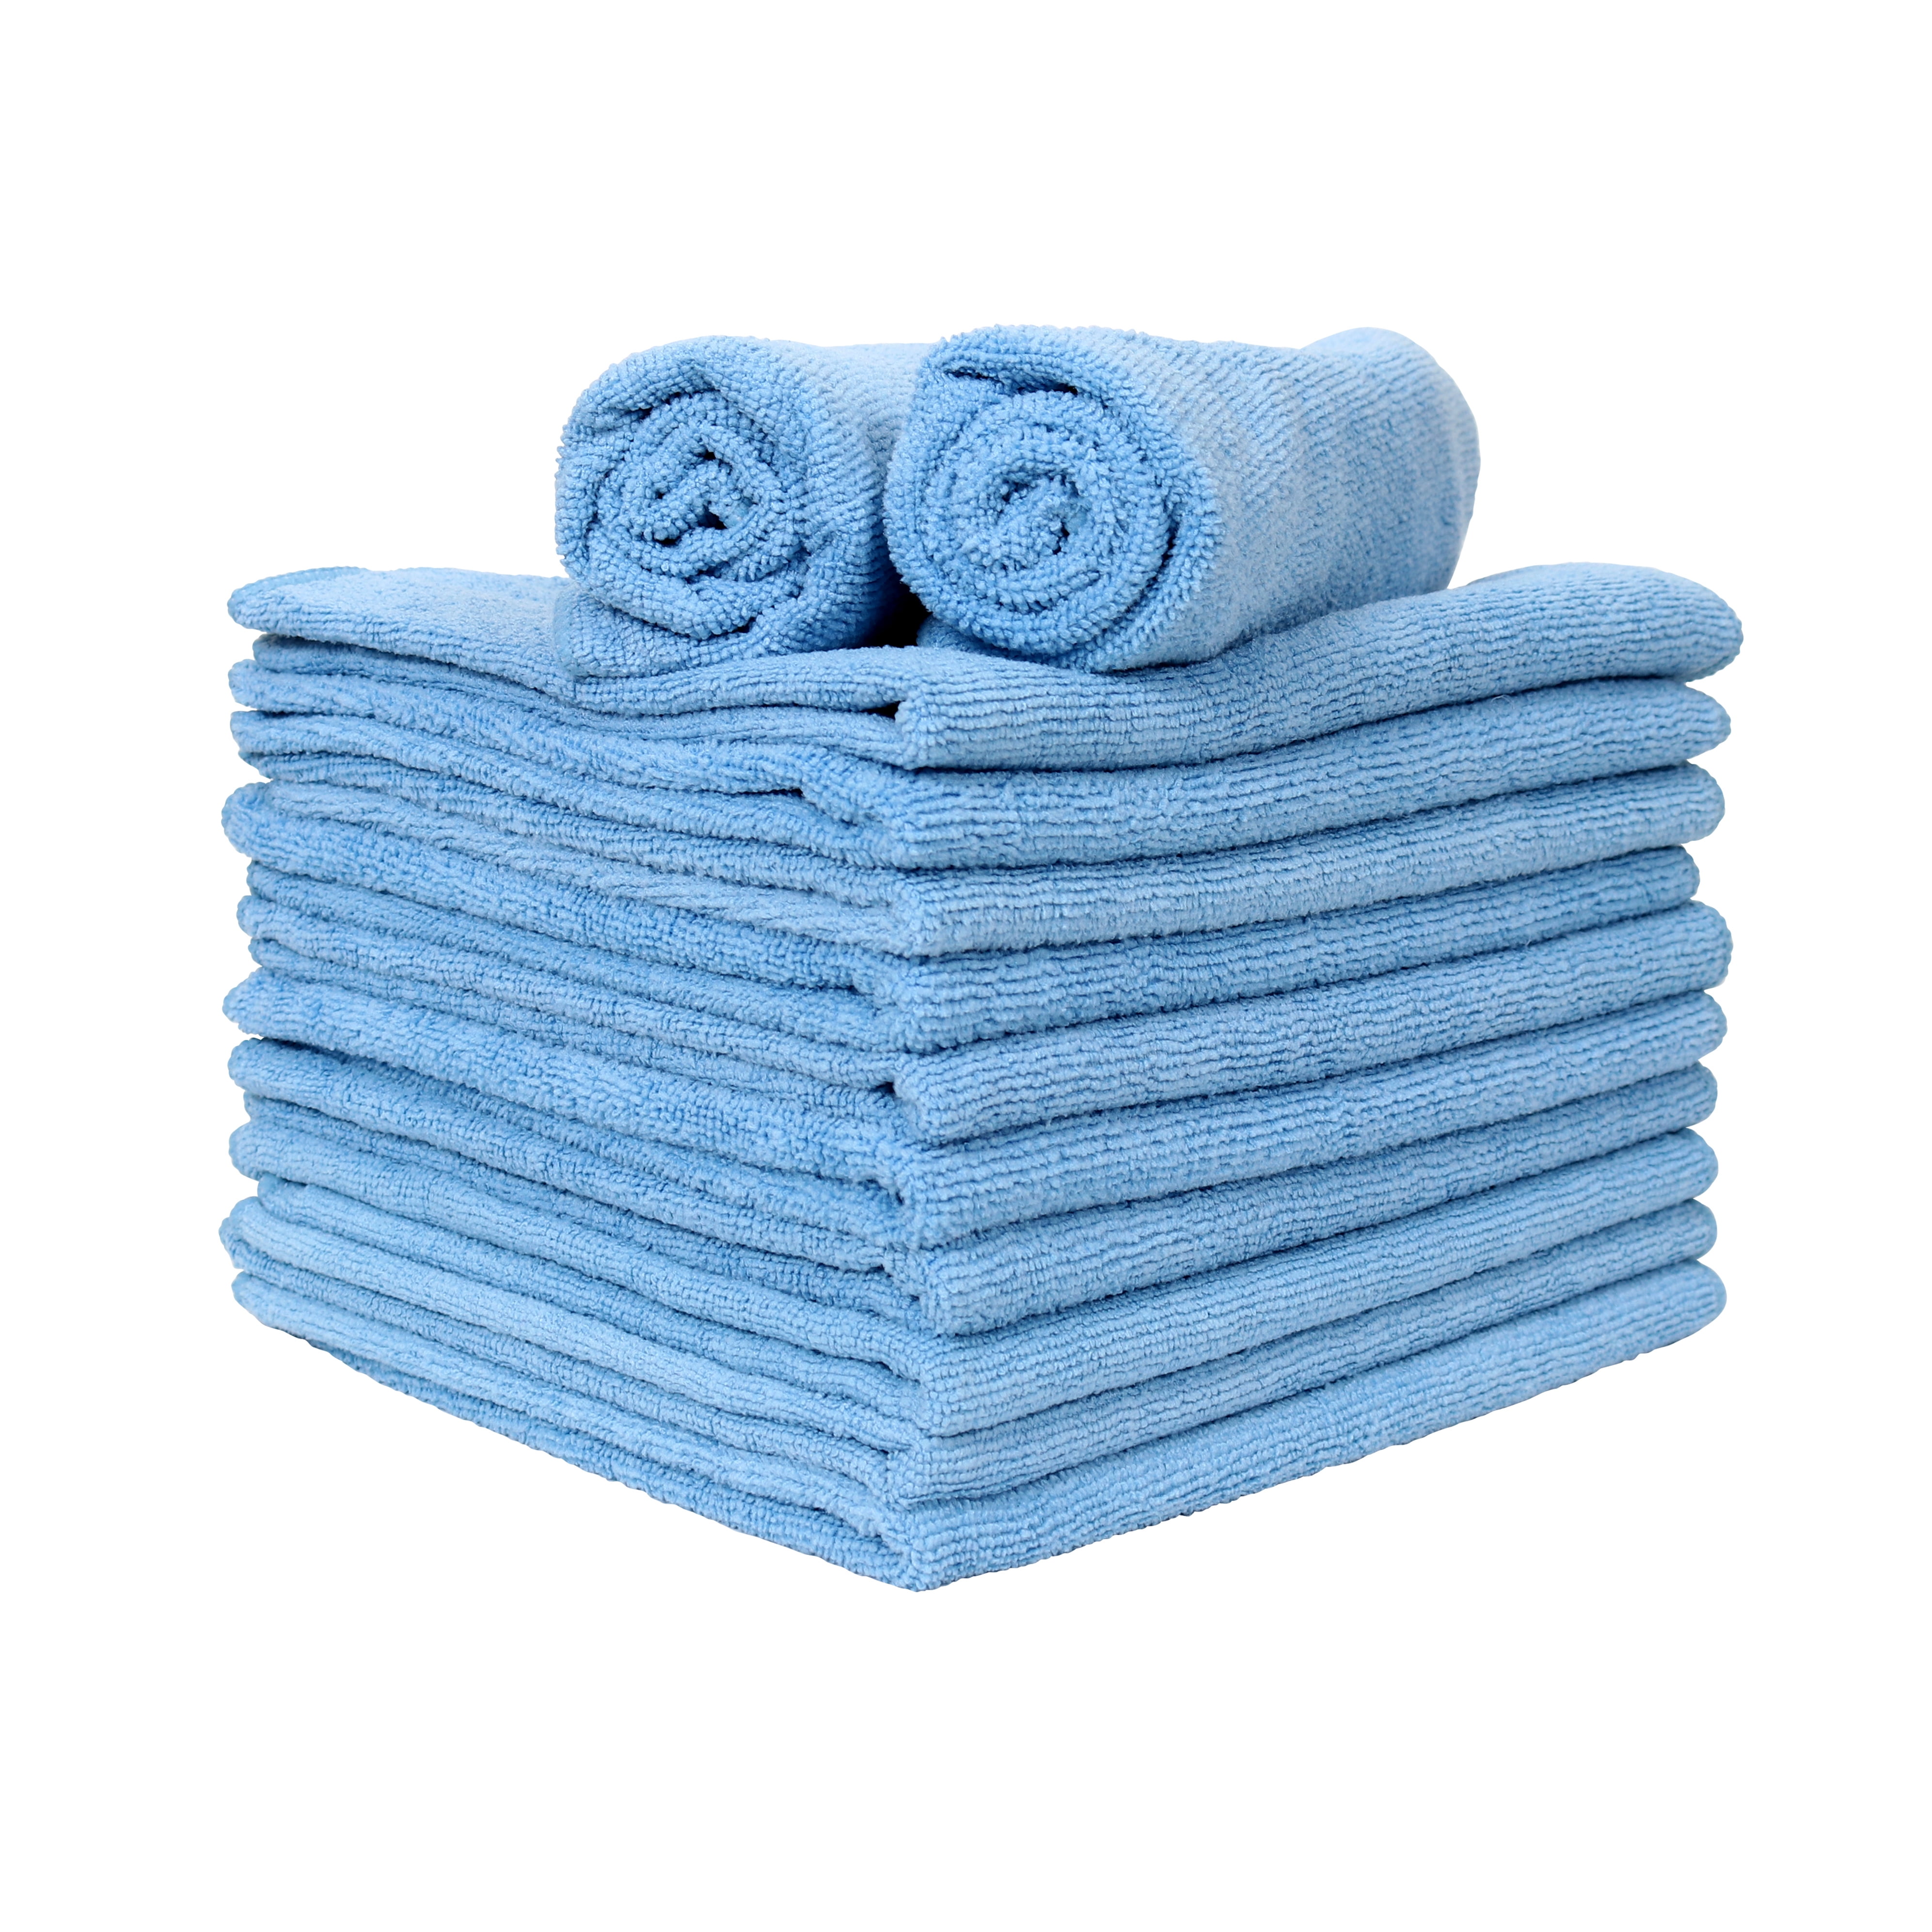 3 new white 16x30 premium hand towels gym salon tanning hotel yoga resort style 